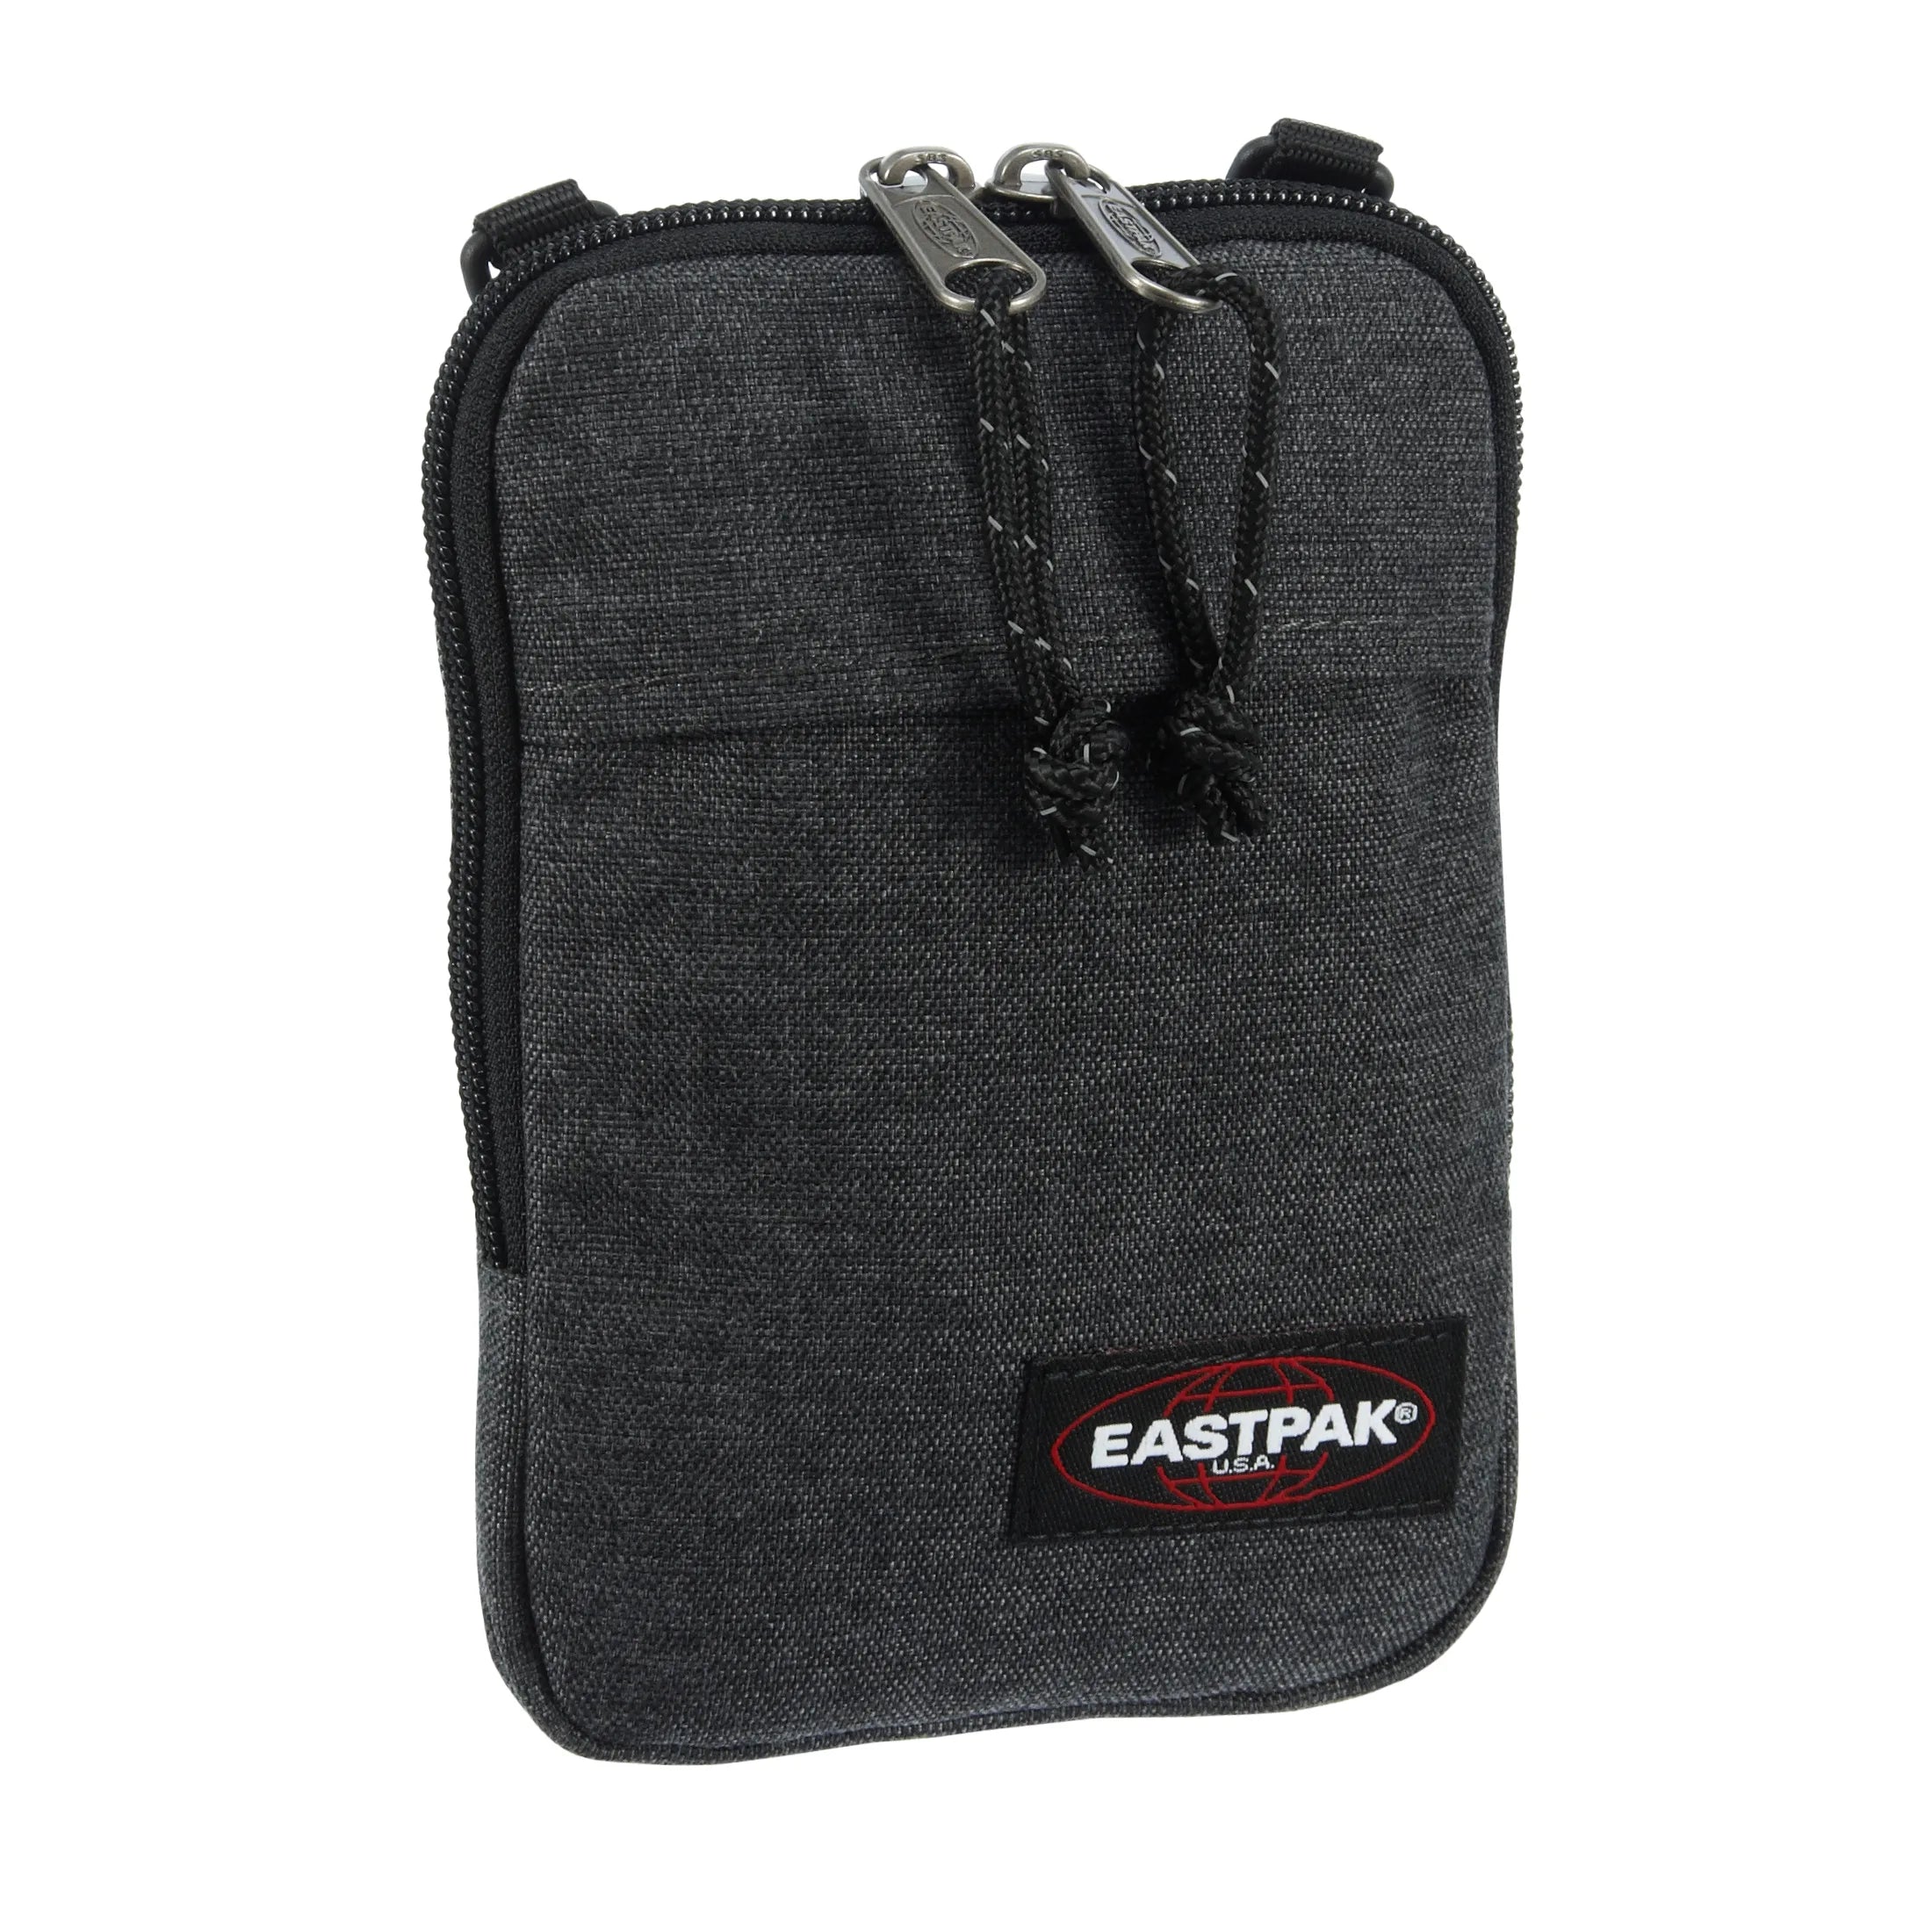 Eastpak Authentic Buddy youth bag 18 cm - black denim